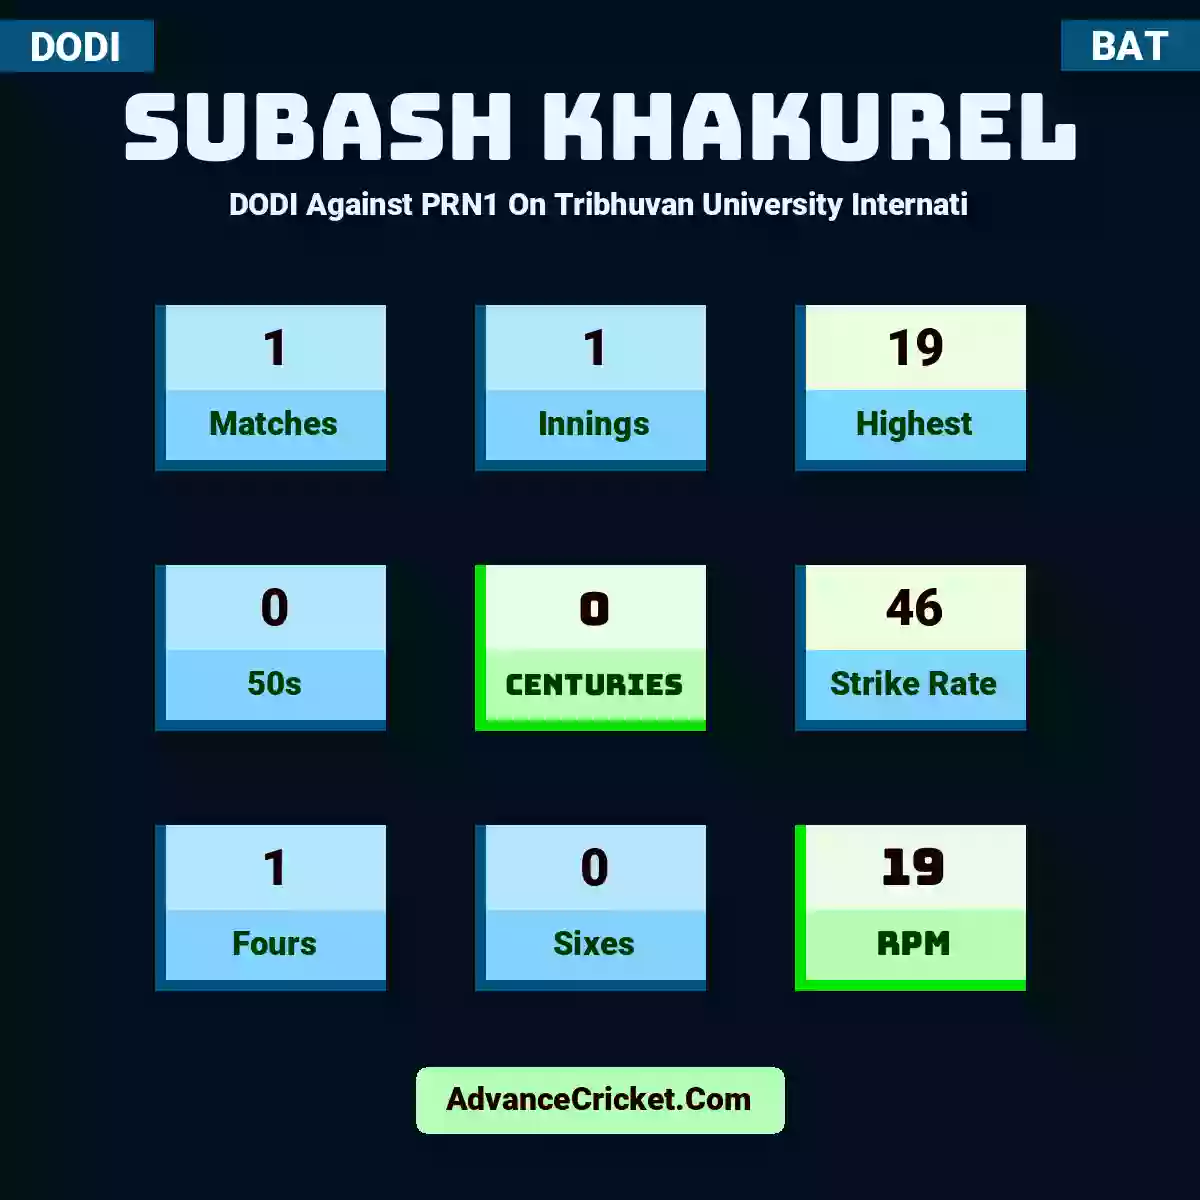 Subash Khakurel DODI  Against PRN1 On Tribhuvan University Internati, Subash Khakurel played 1 matches, scored 19 runs as highest, 0 half-centuries, and 0 centuries, with a strike rate of 46. S.Khakurel hit 1 fours and 0 sixes, with an RPM of 19.